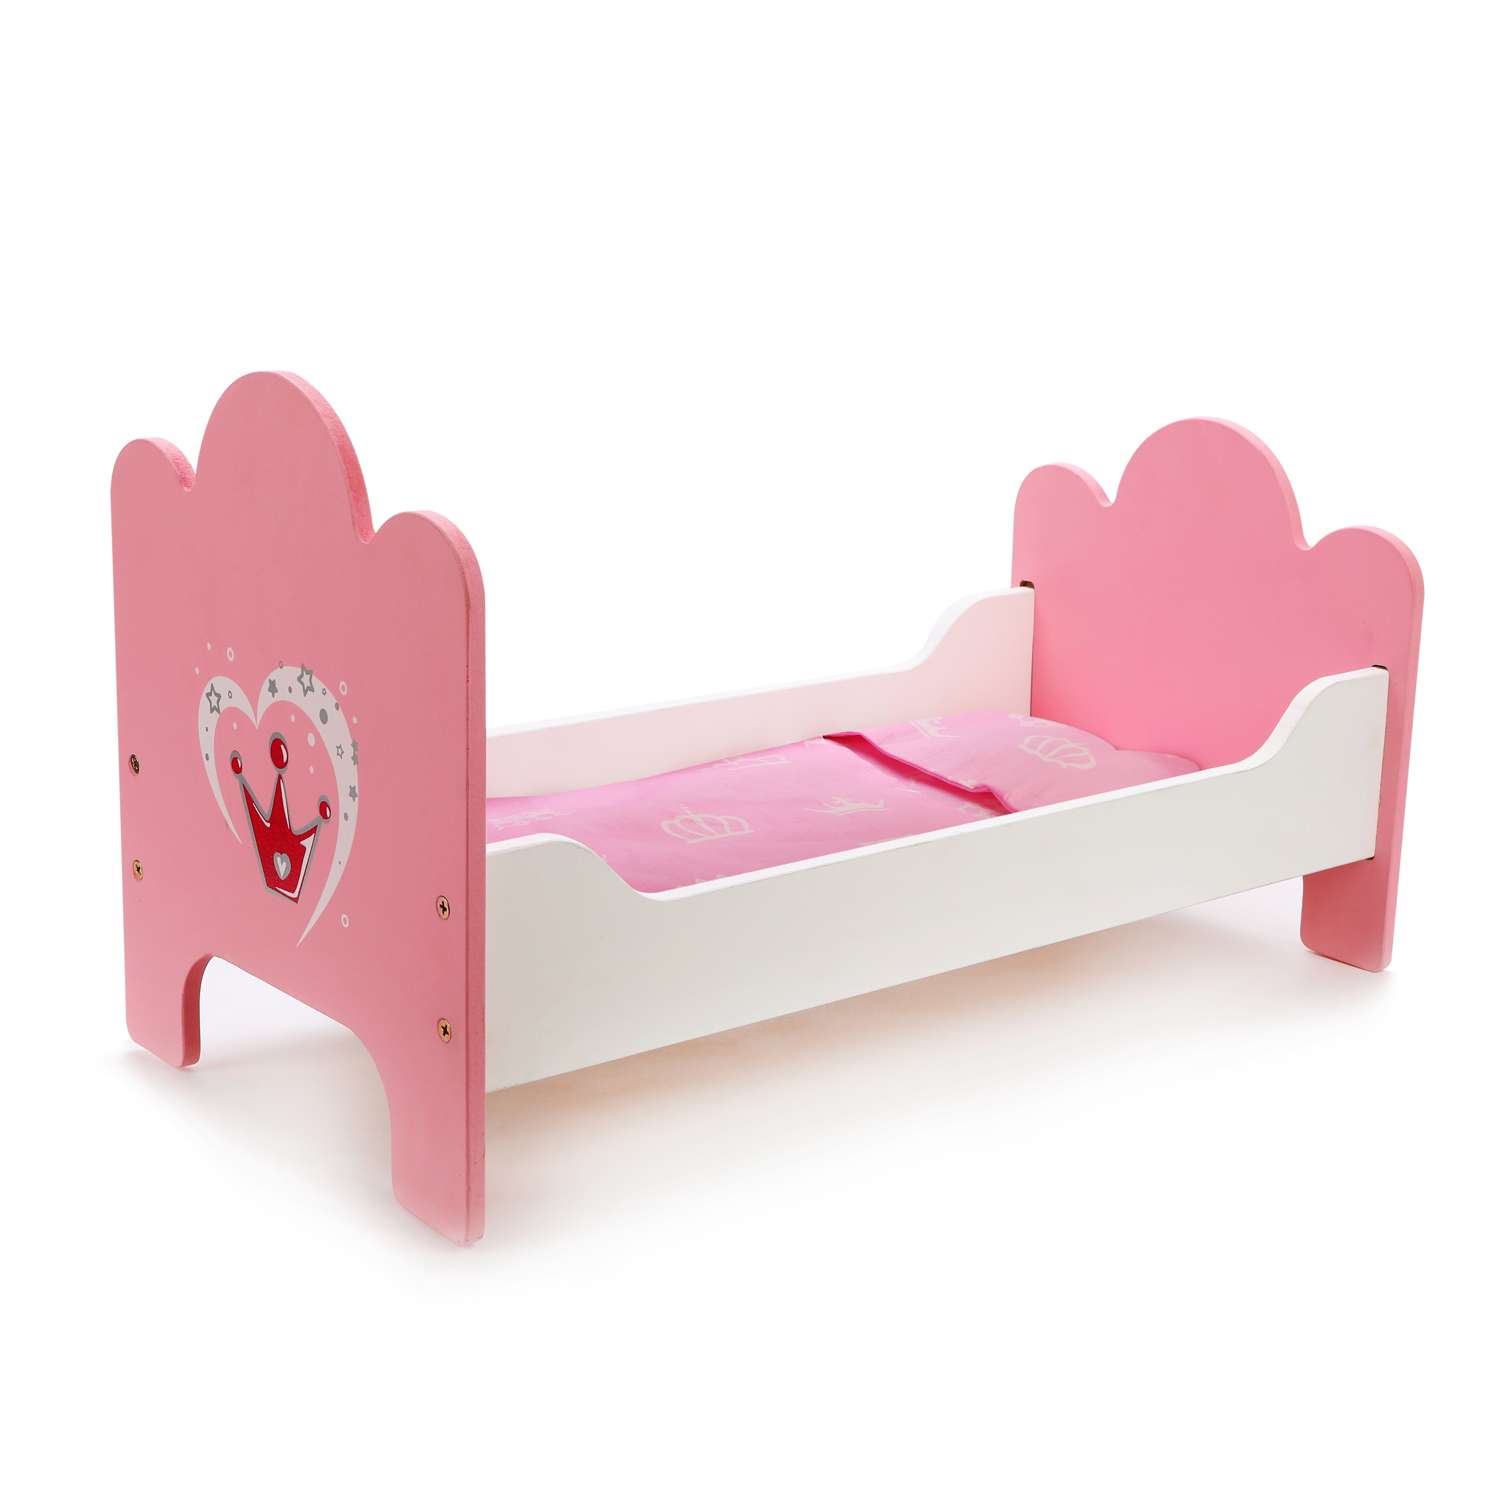 Кроватка Mary Poppins кукольная мебель для куклы пупса люлька для кукол. Корона. 48375 - фото 1